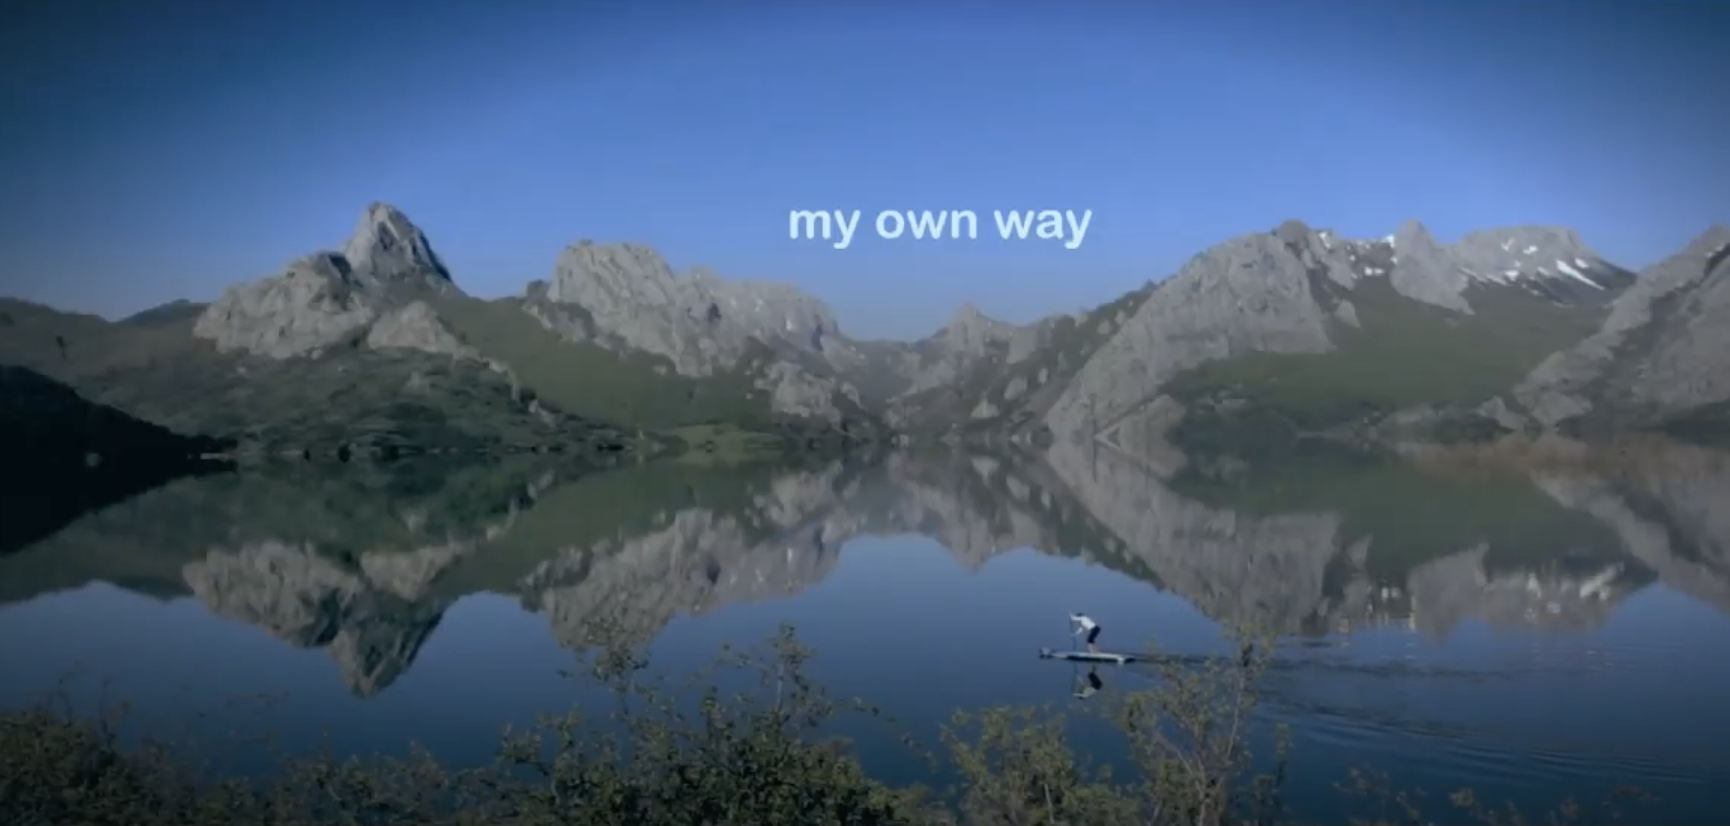 ANOMY "my own way"